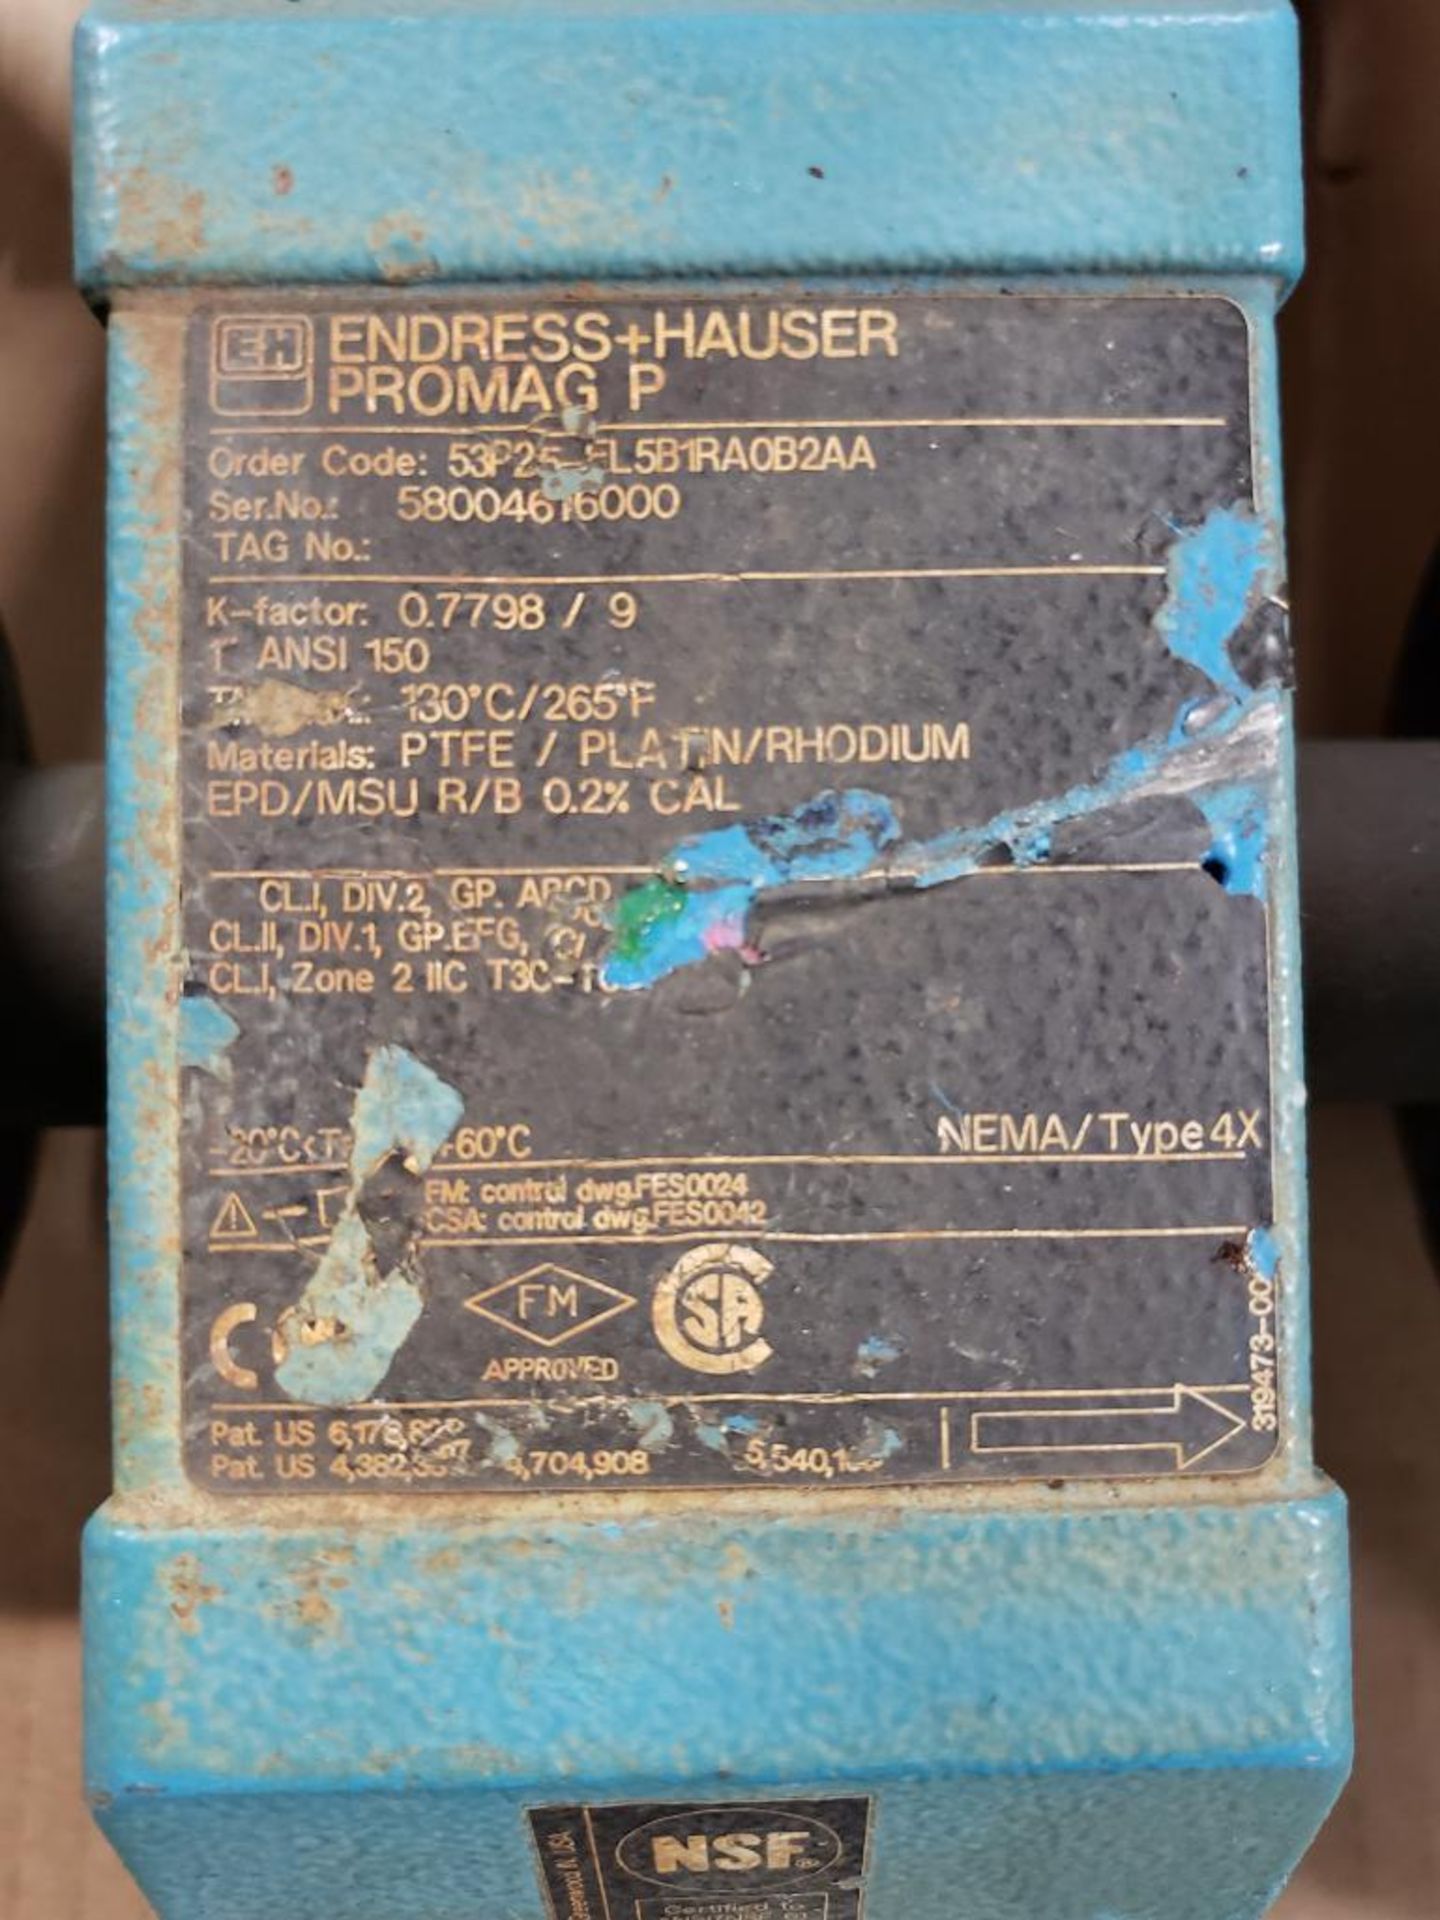 Endress + Hauser PROMAG P 53P25-FL5B1RA0B2AA electromagnetic flowmeter. - Image 2 of 5